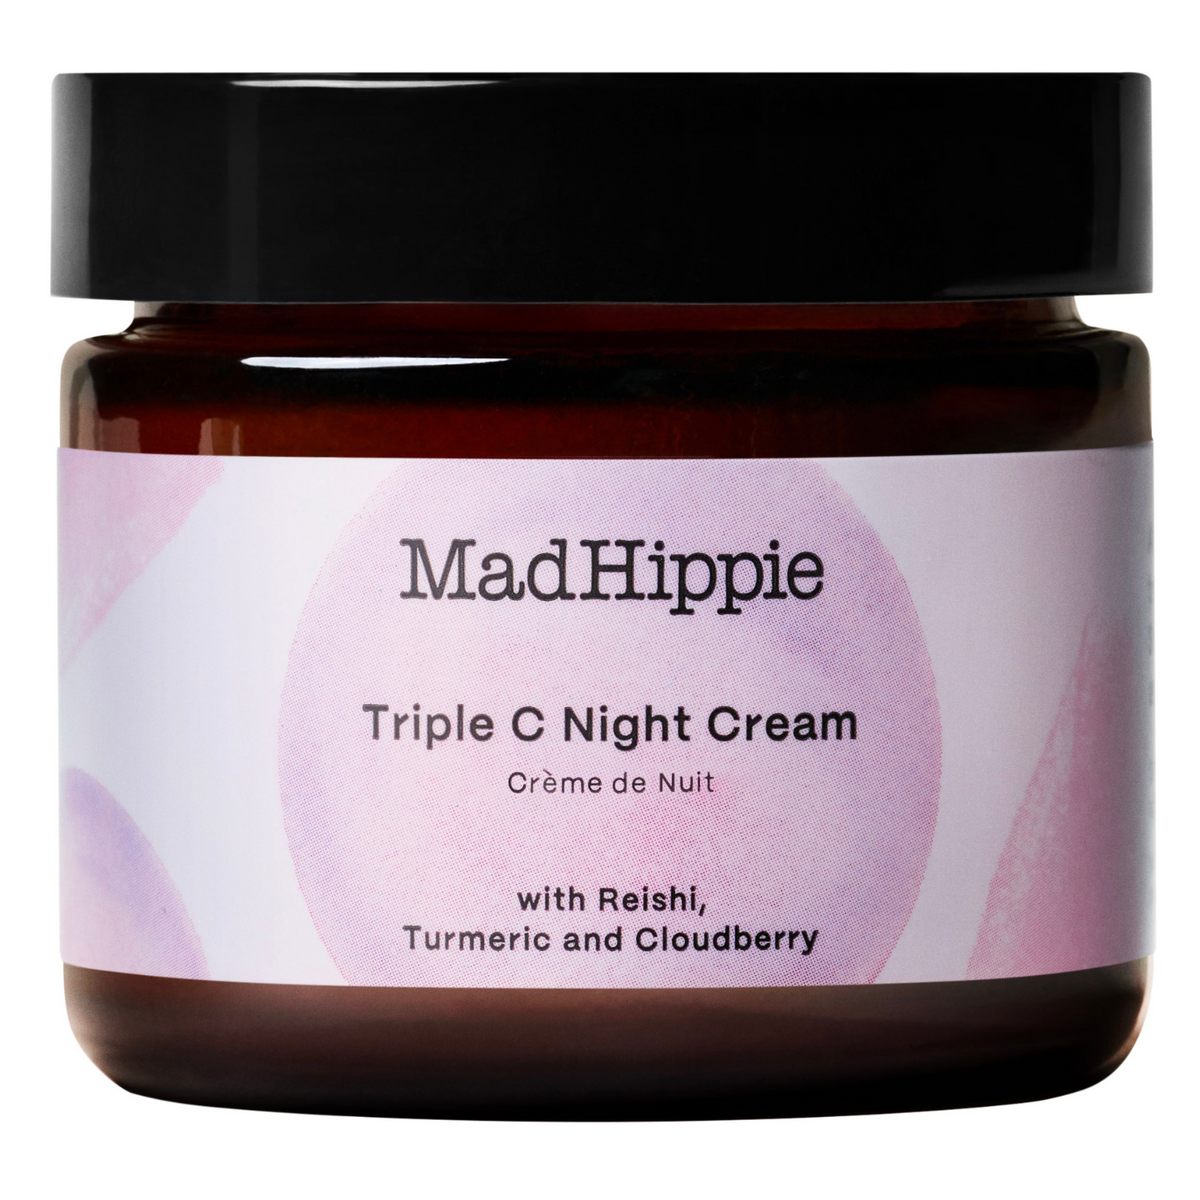 Triple C Night Cream with Reishi, Turmeric and Cloudberry